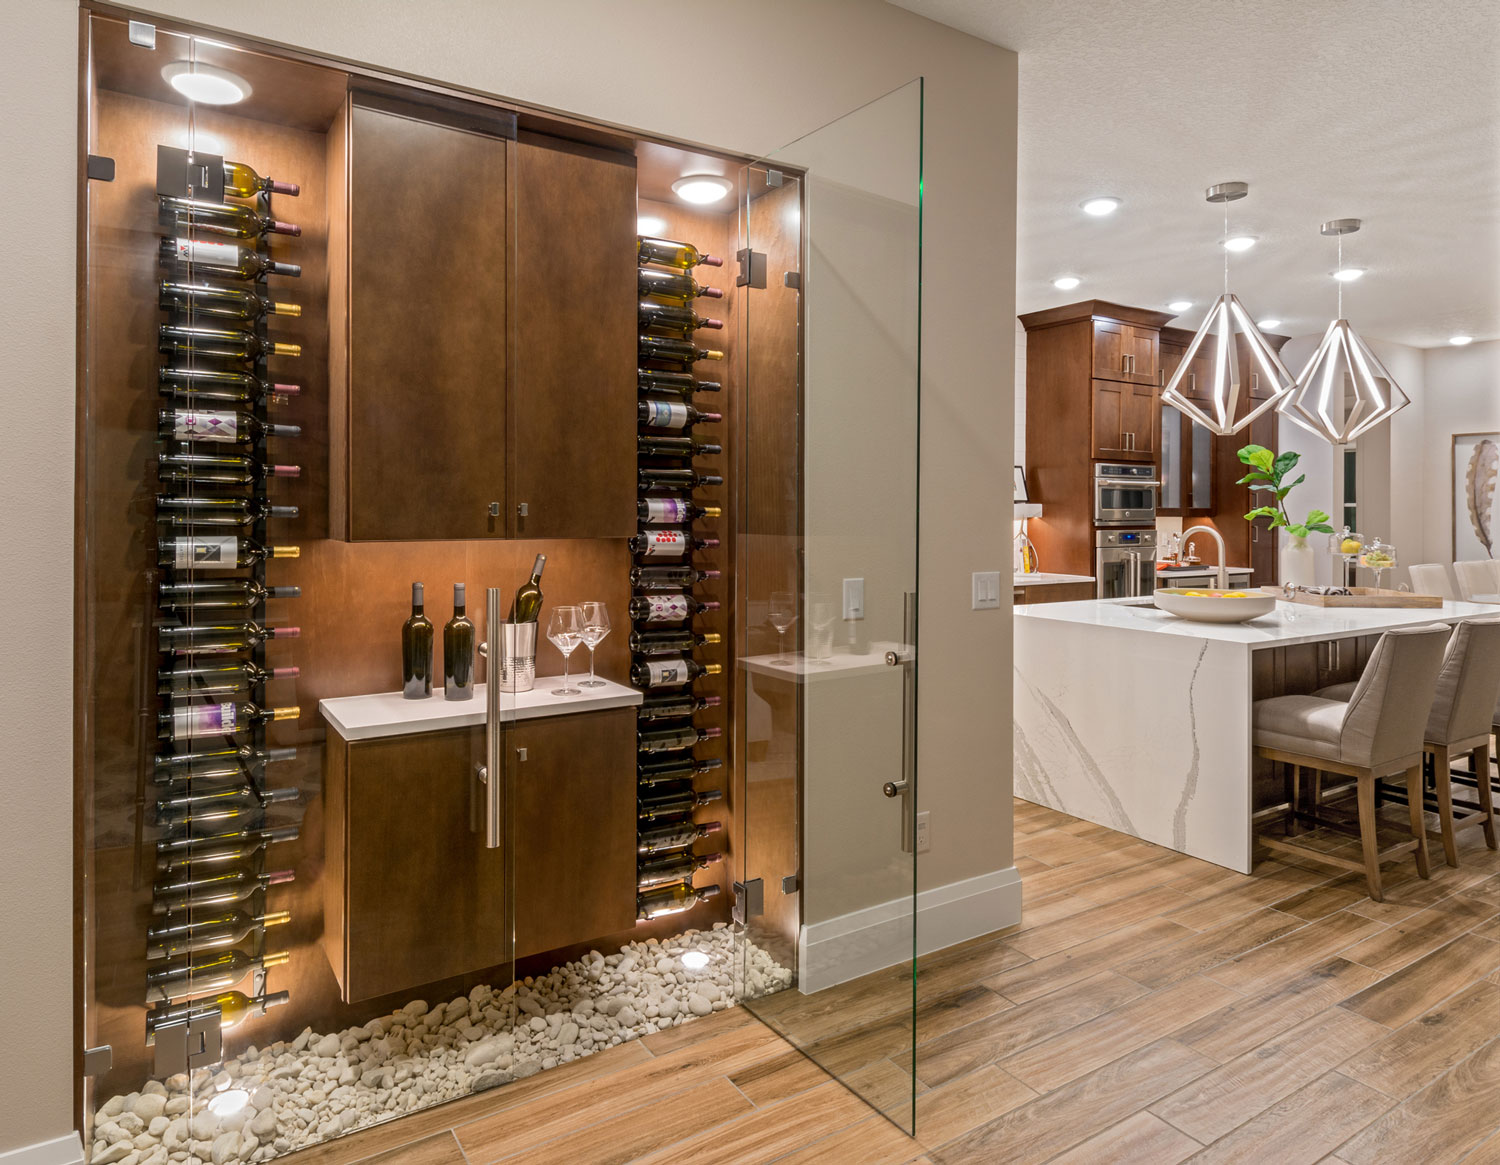 Creative wine storage in wall nook off kitchen in award-winning 55+ home buyer model home in Orlando, Florida.